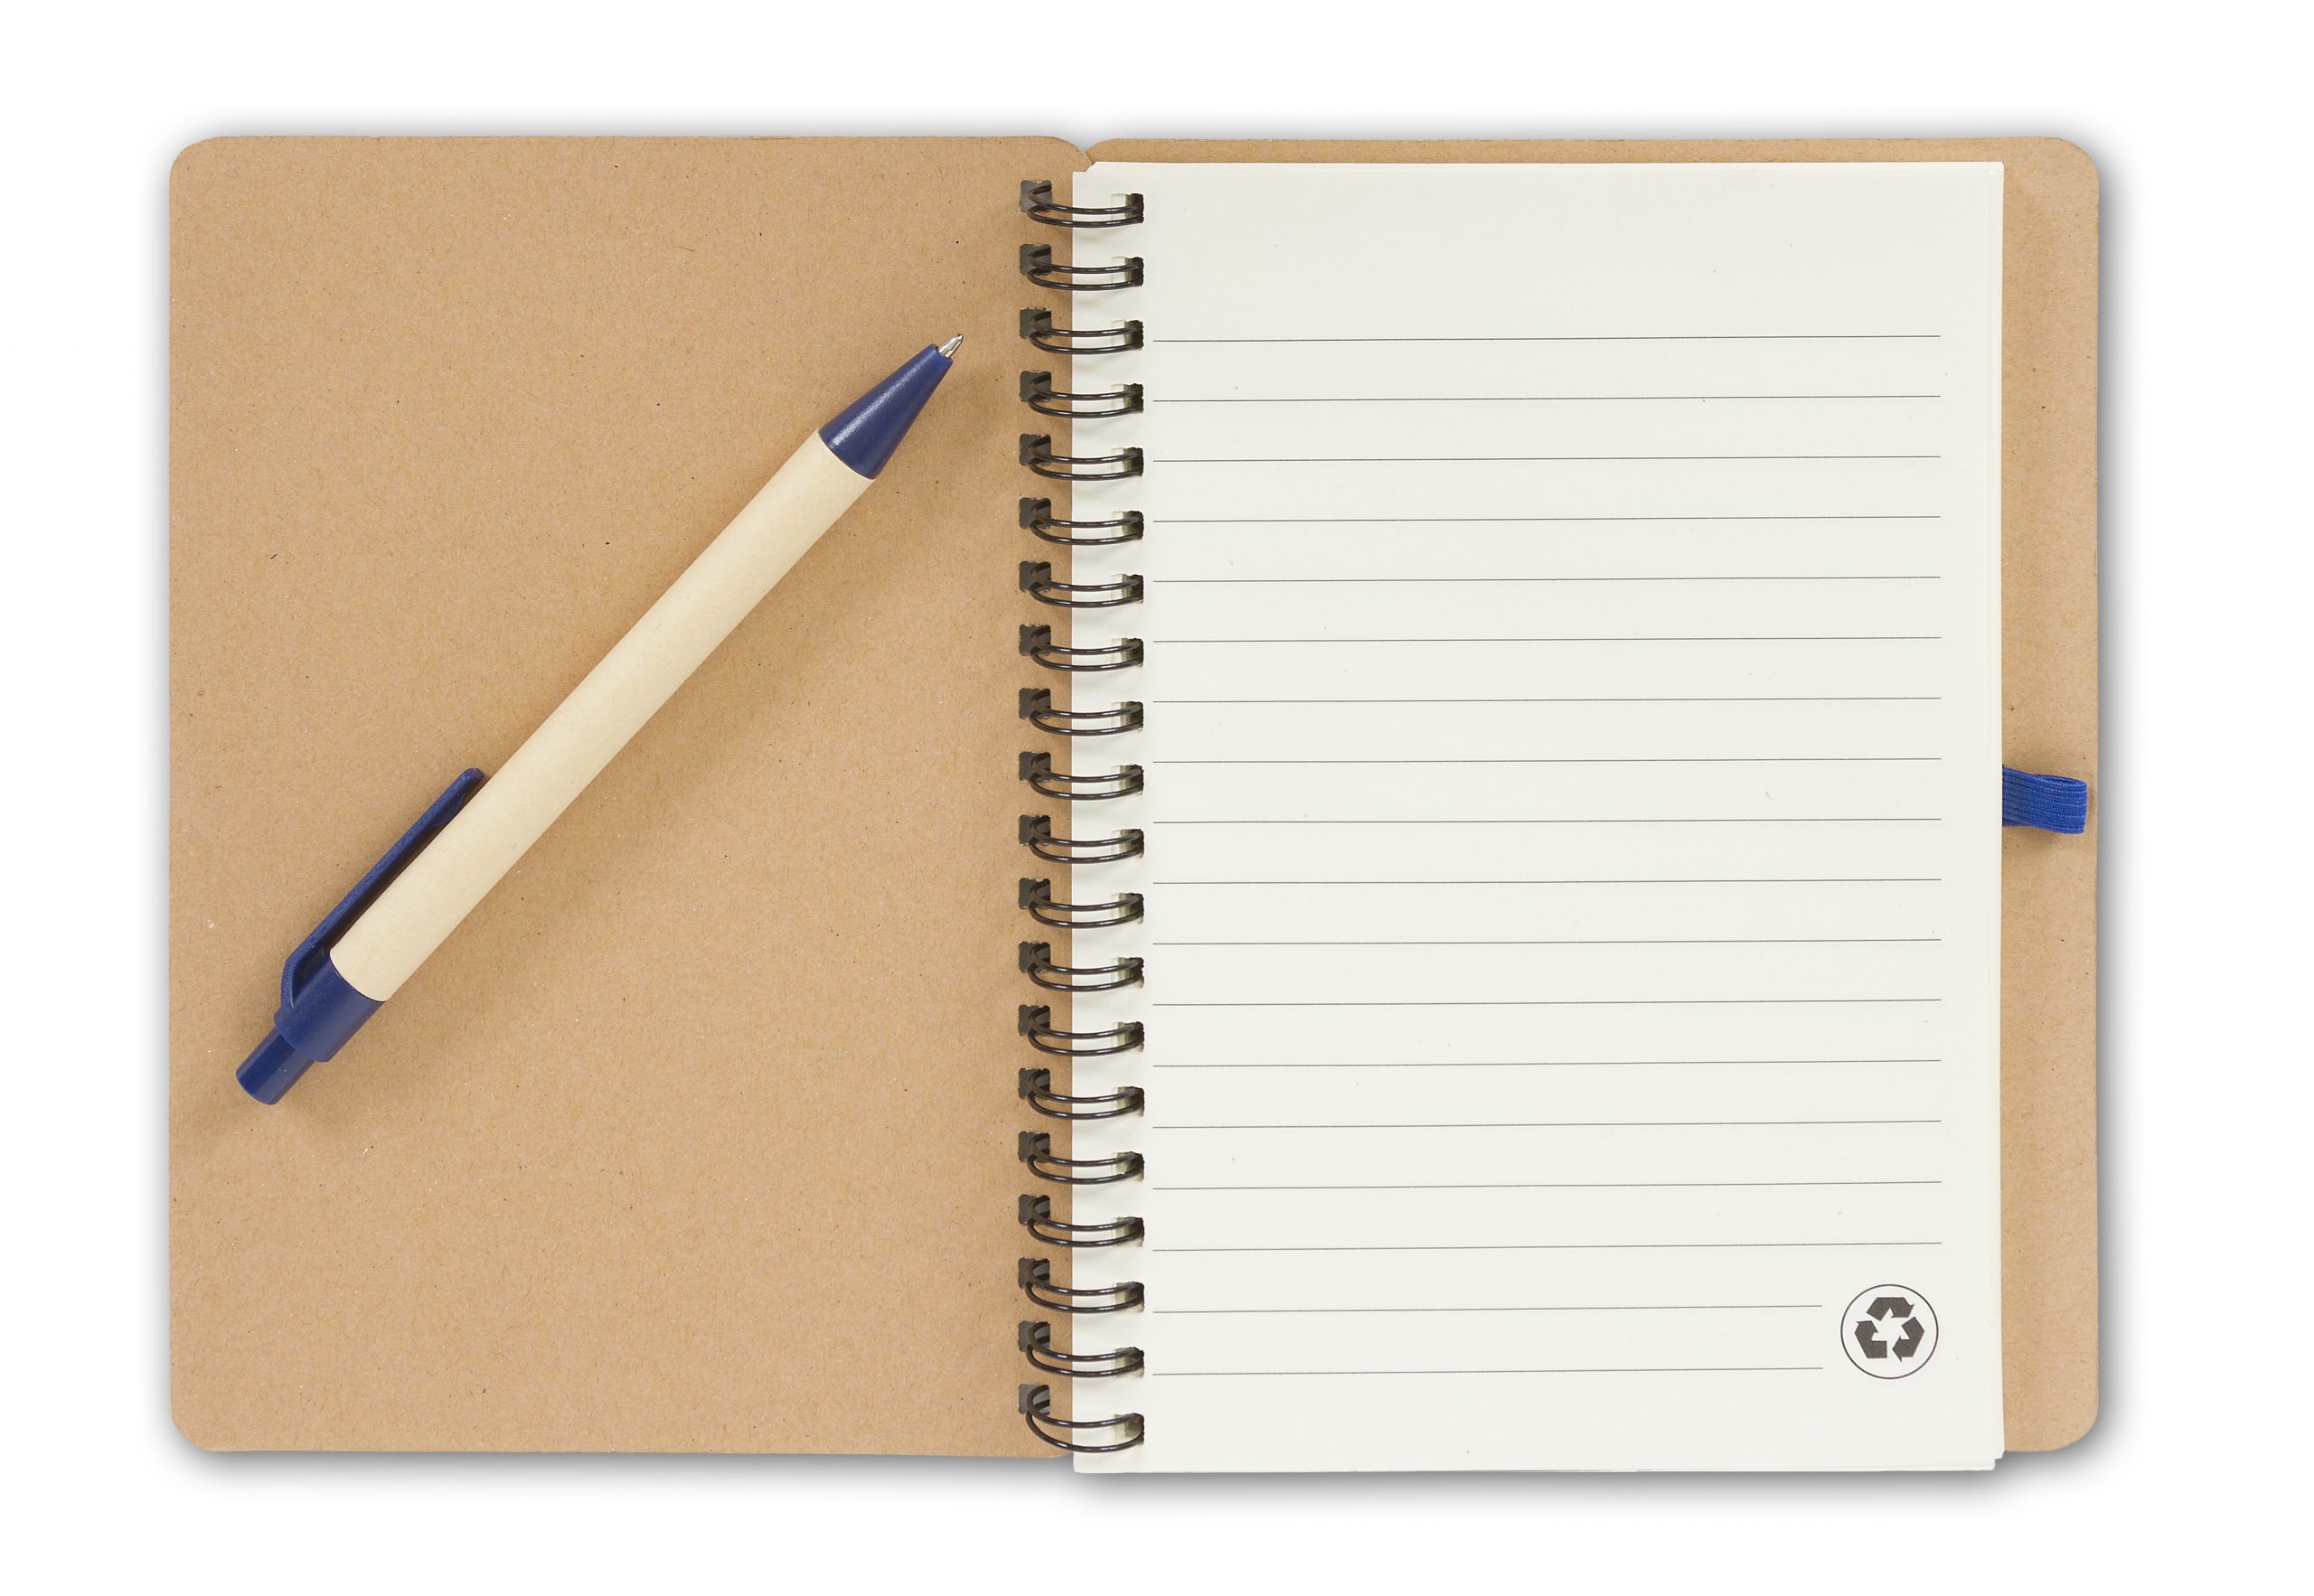 Spiral notebook and a pen